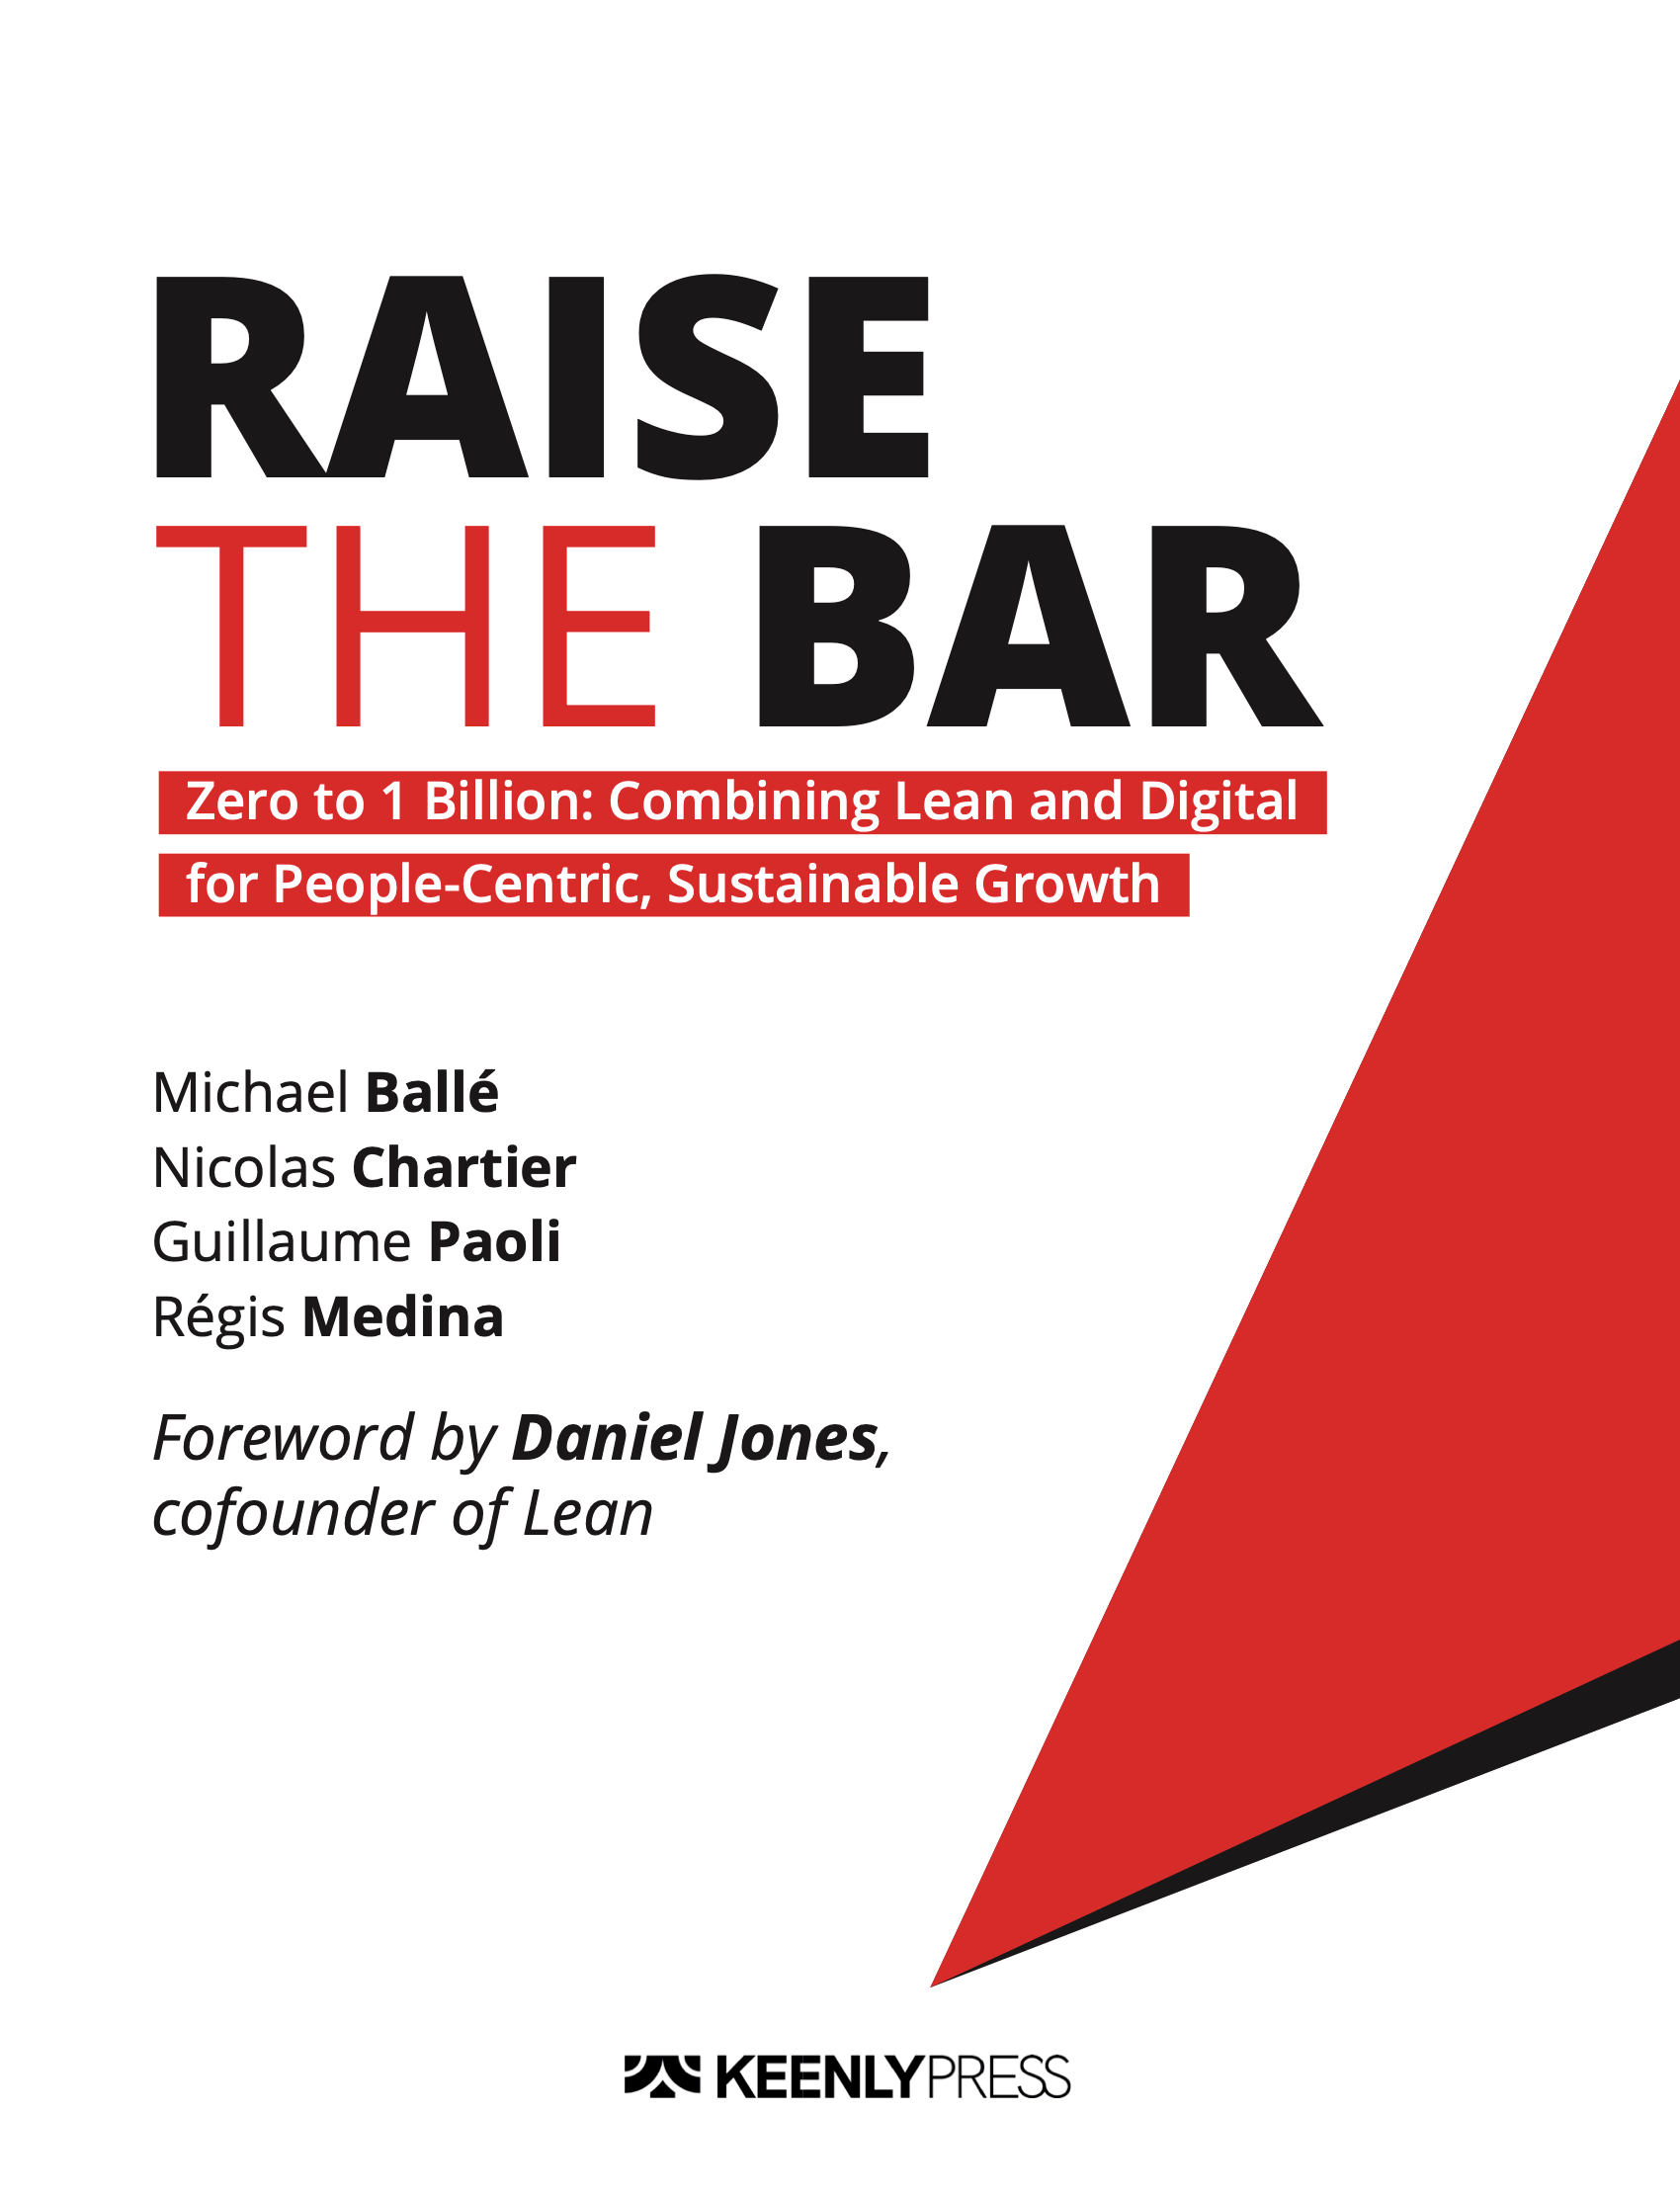 Raise the bar